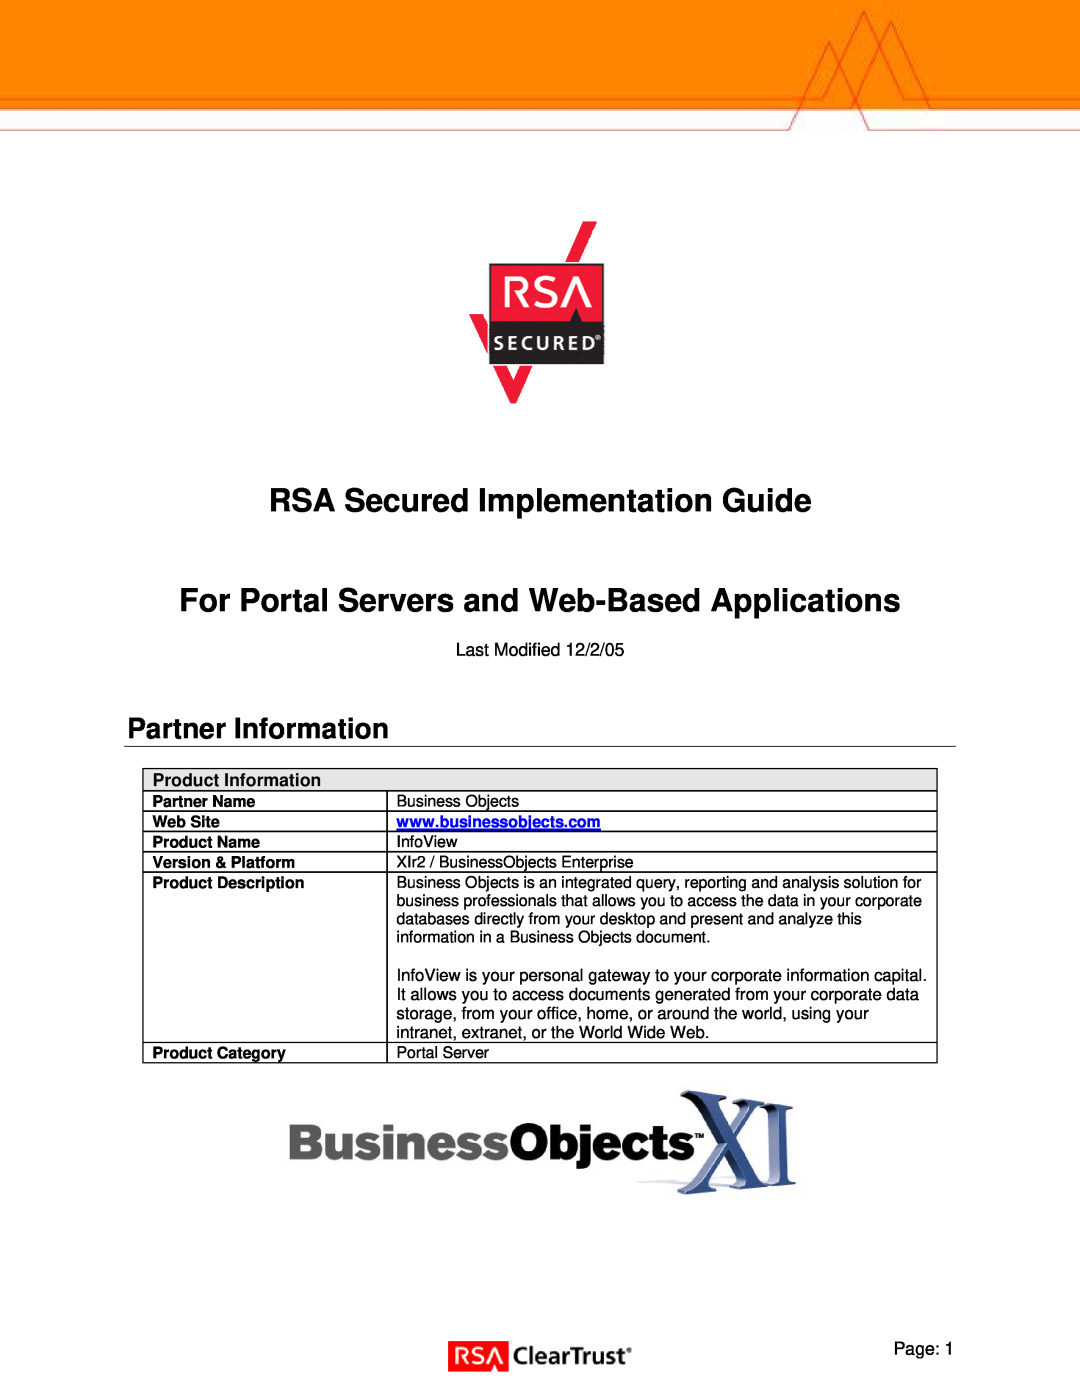 RSA Security Xlr2 manual Partner Information, RSA Secured Implementation Guide 